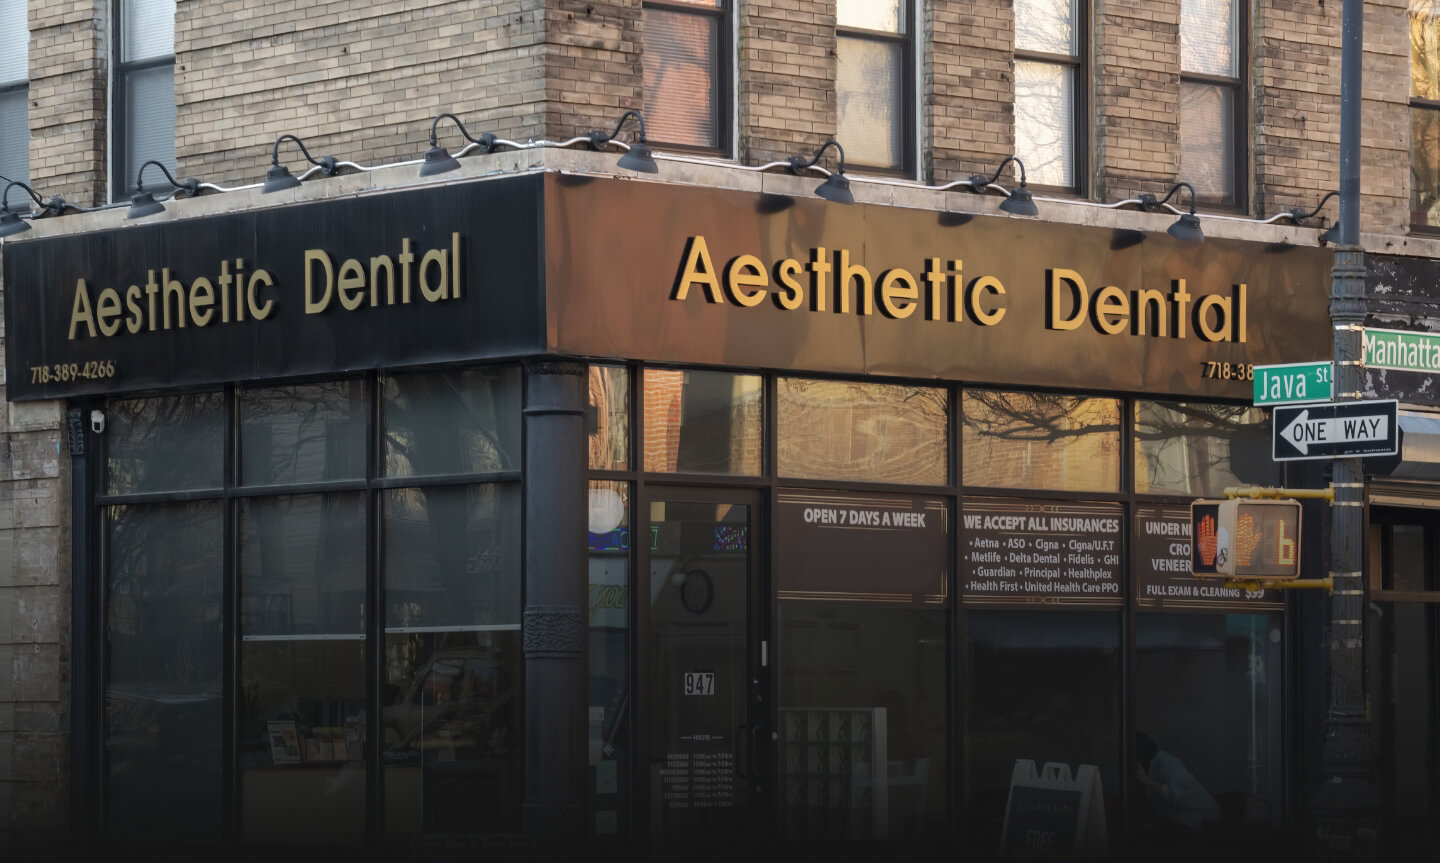 Aesthetic Dental exterior